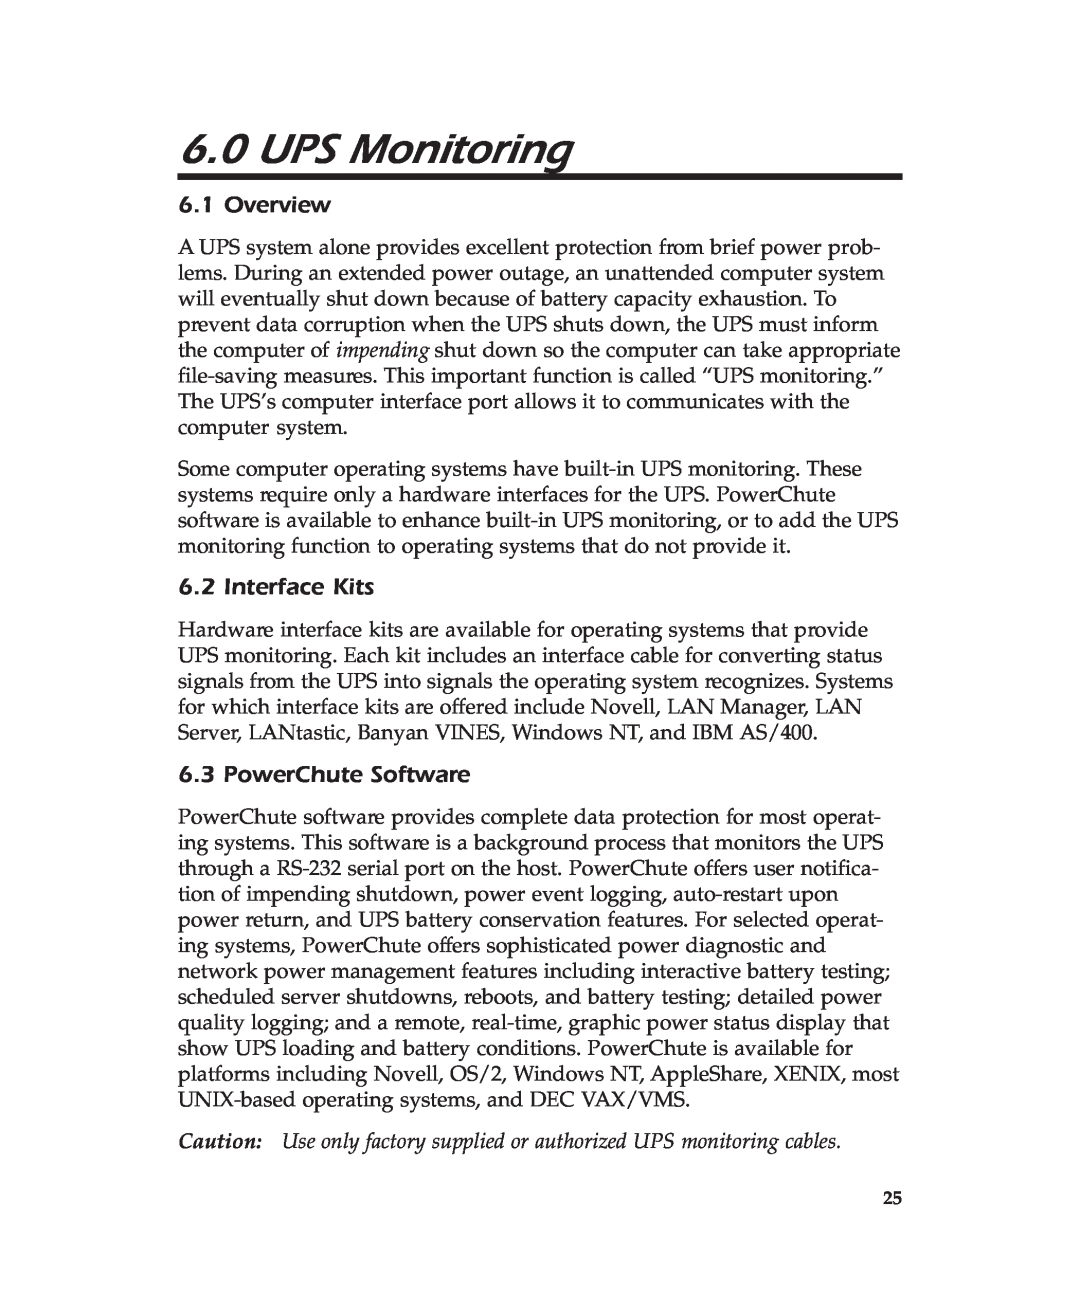 APC 600 user manual 6.0UPS Monitoring, 6.1Overview, Interface Kits, PowerChute Software 